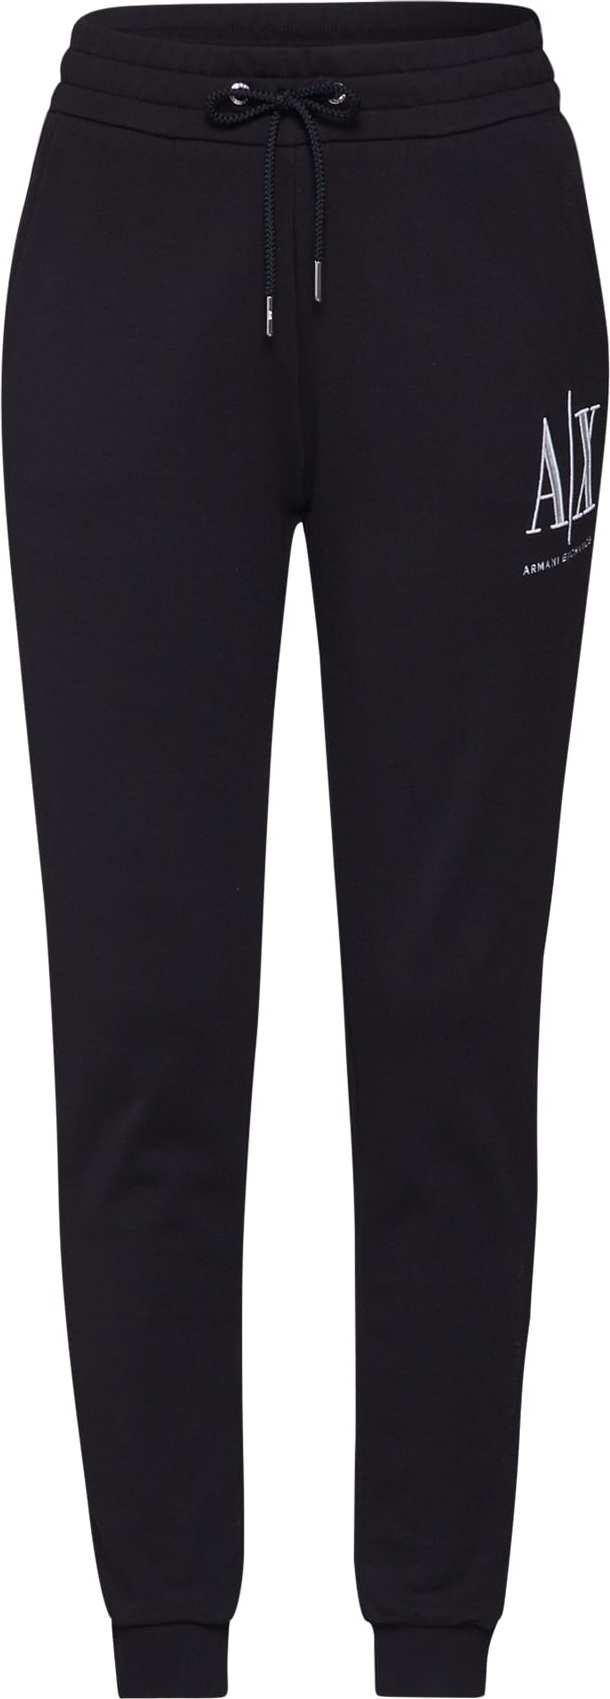 Kalhoty '8NYPCX' Armani Exchange černá